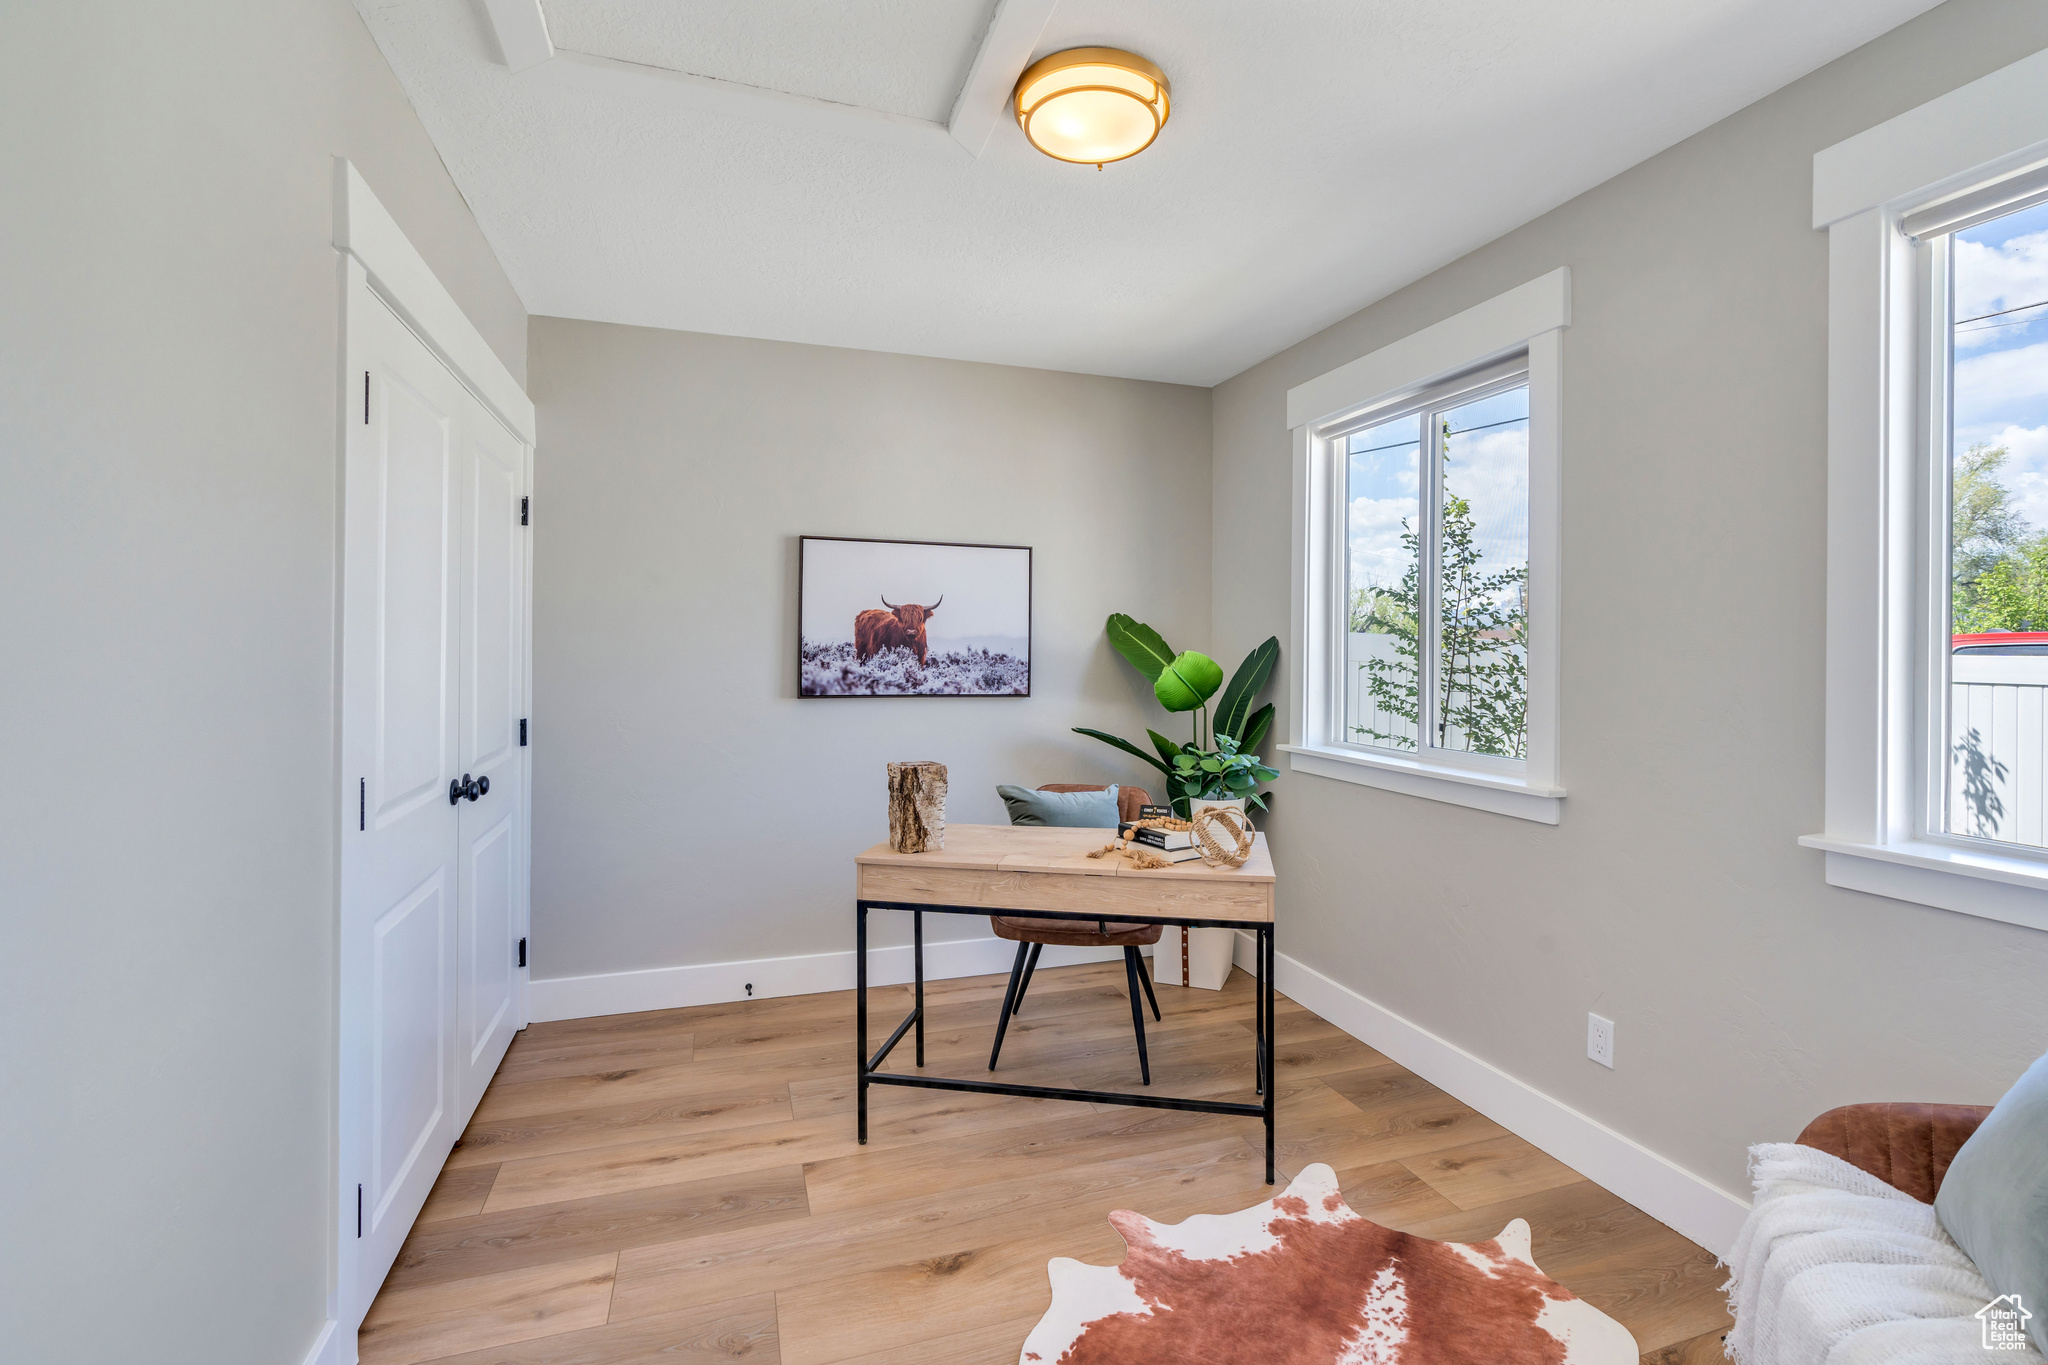 Bedroom or Home office featuring light hardwood / wood-style floors